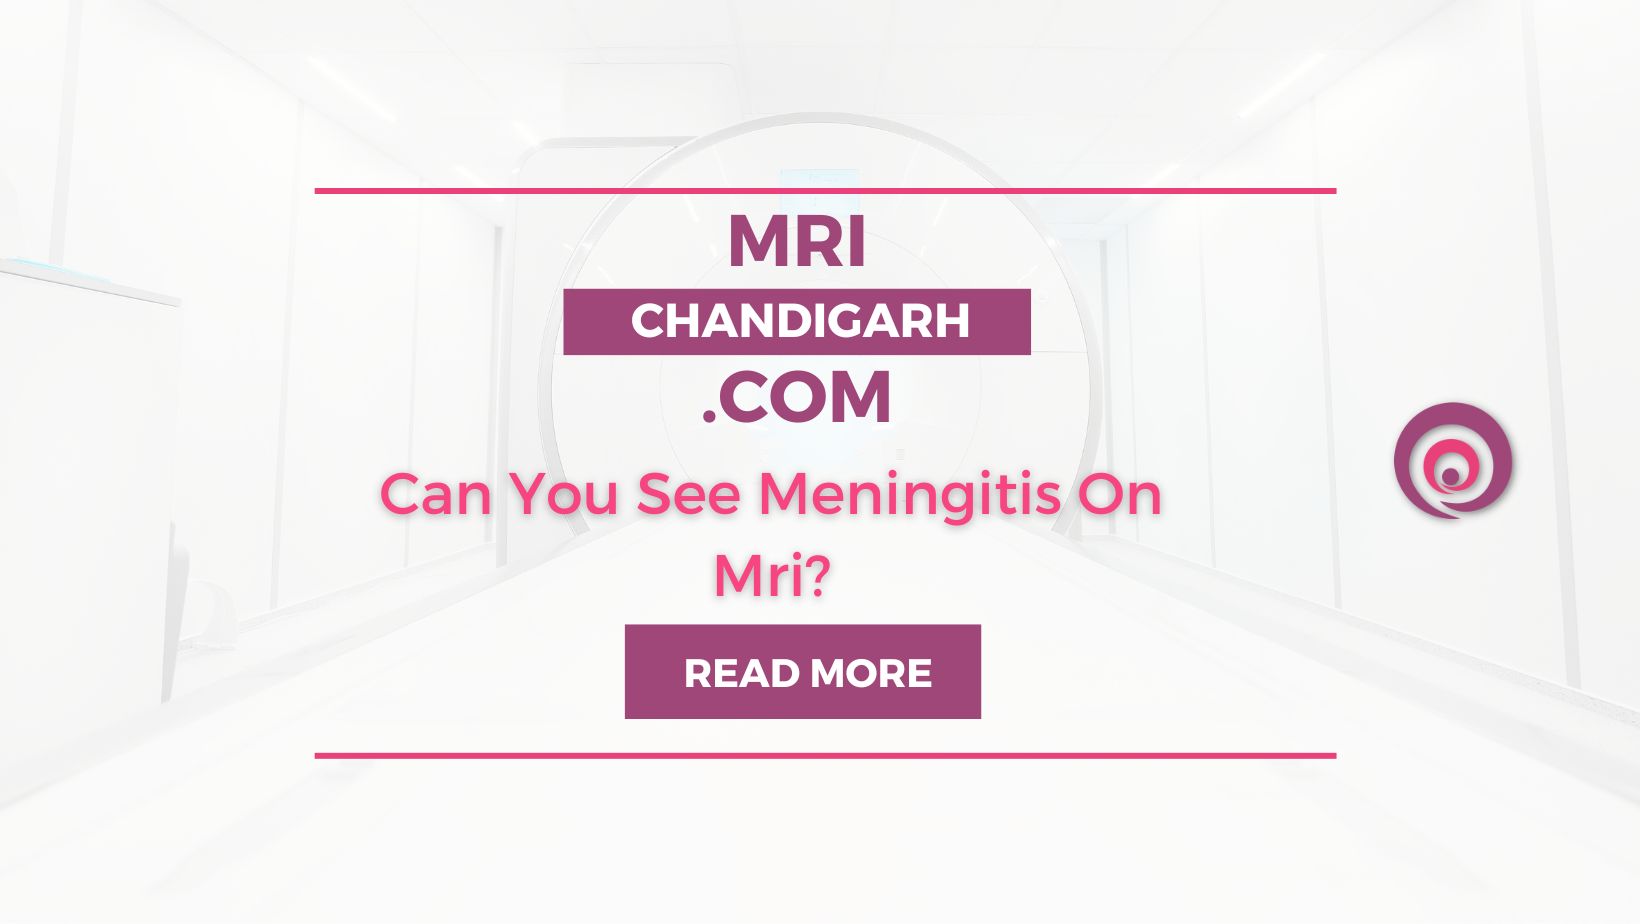 Can You See Meningitis On Mri?